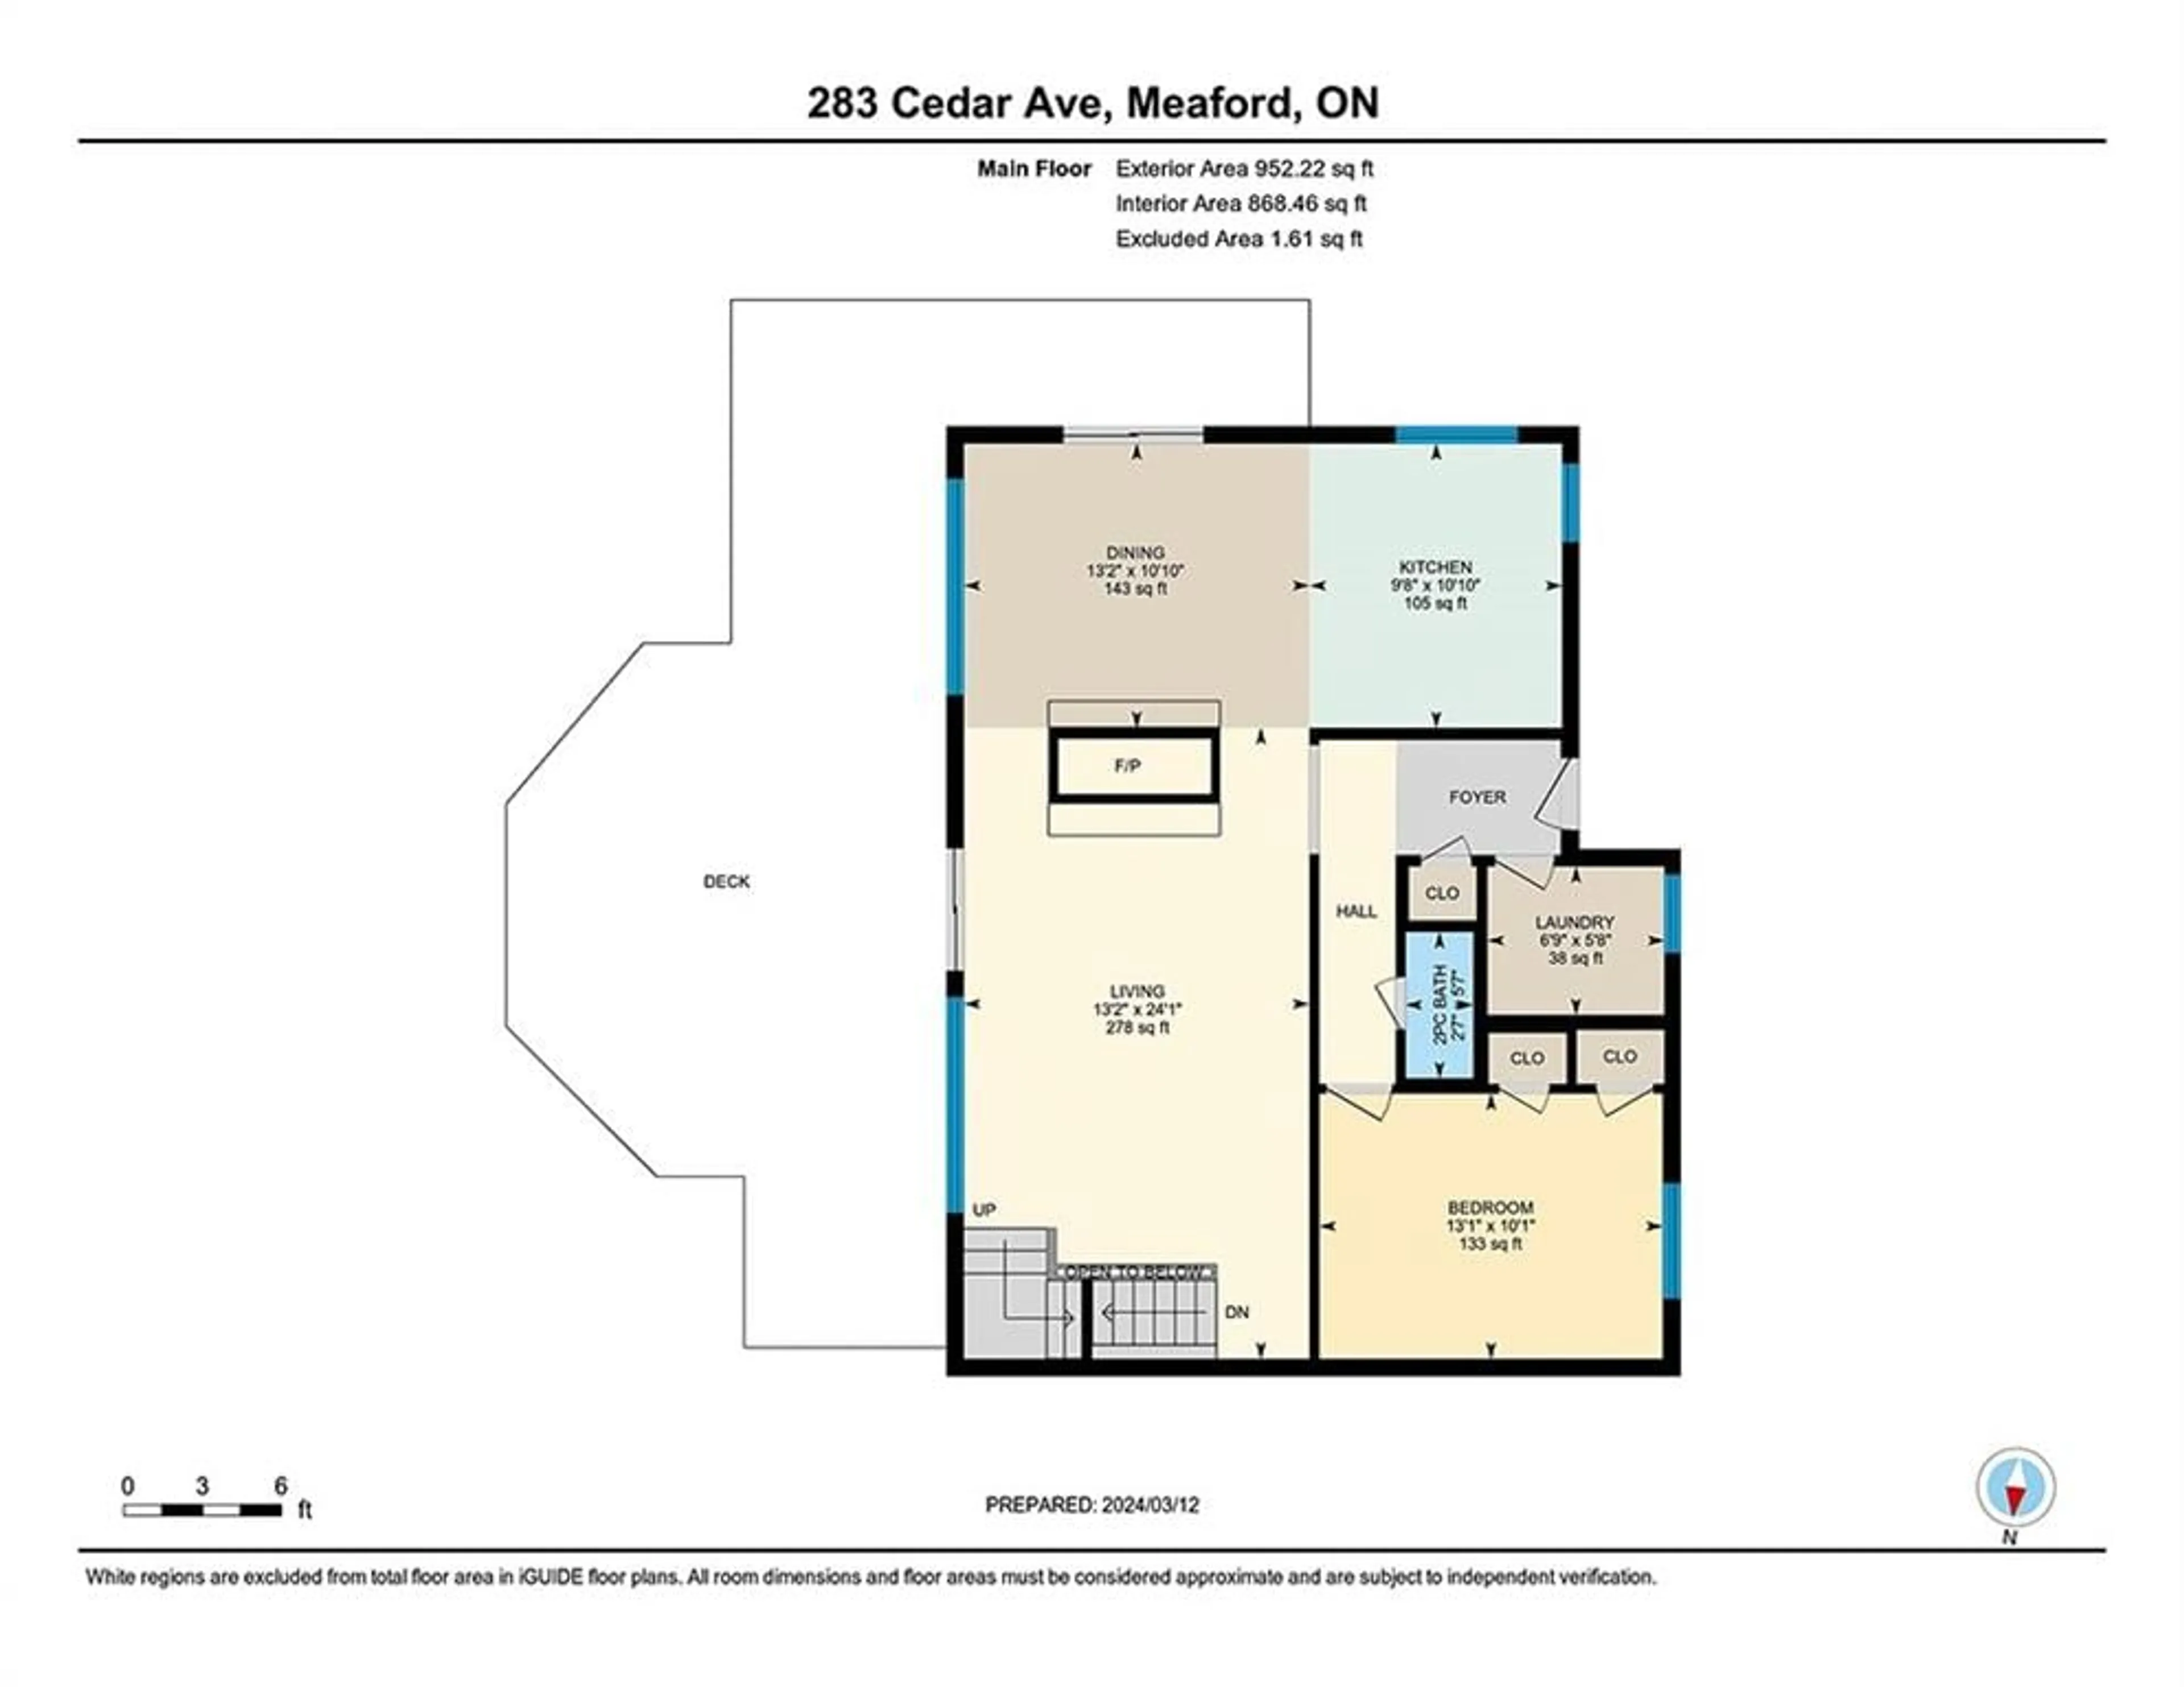 Floor plan for 283 Cedar Ave, Meaford Ontario N4L 1W5